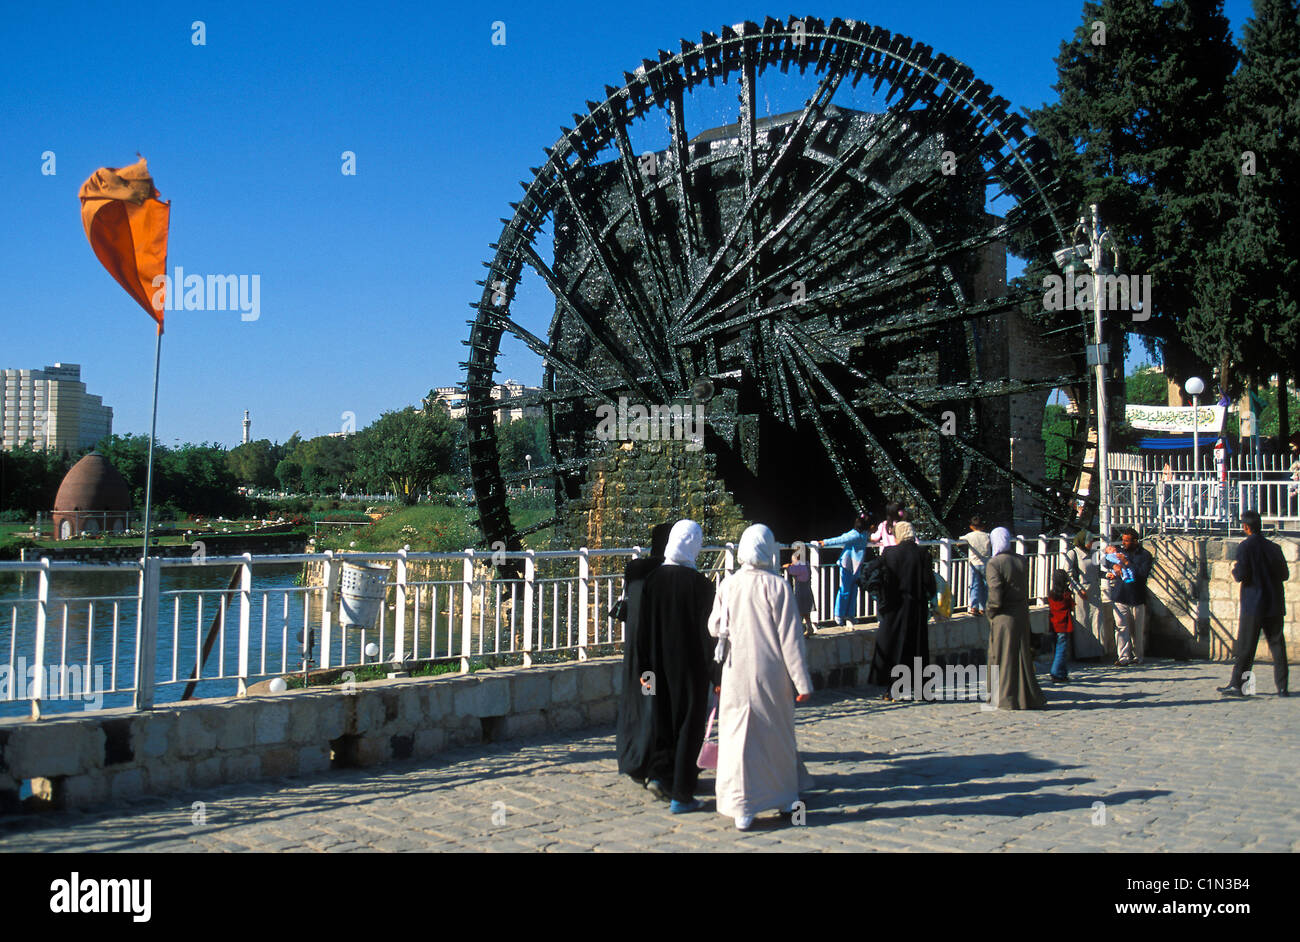 Syria, Hama, noria (former hydraulic machine) on Orontes River Stock Photo